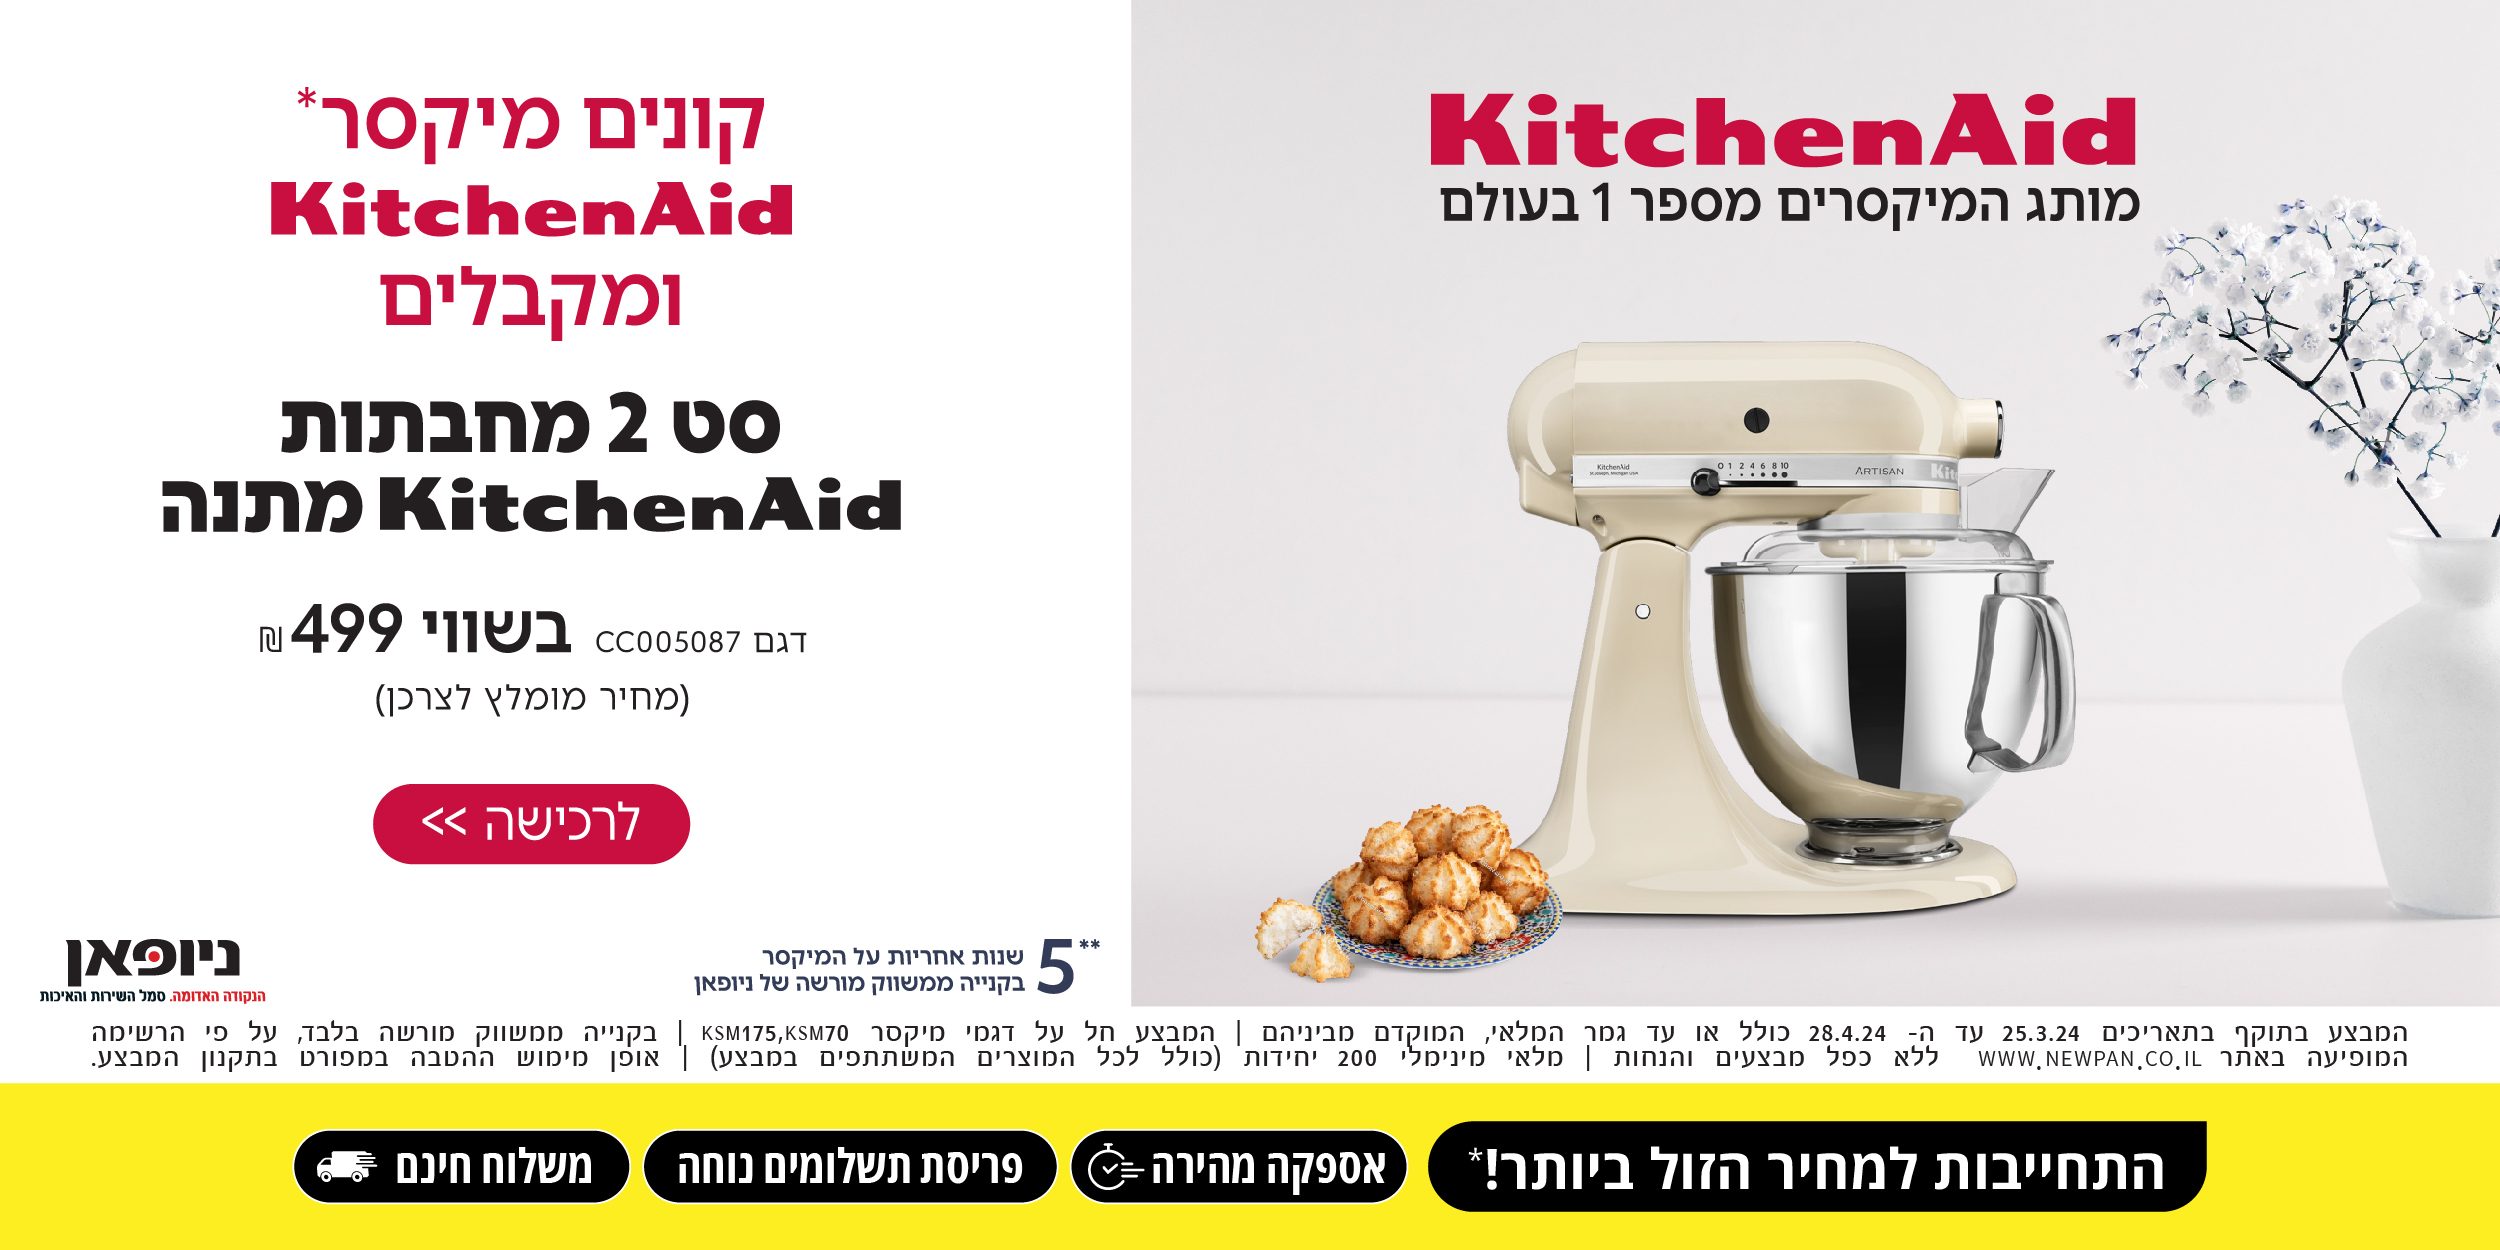 KitchenAid מותג המיקסרים מספר 1 בעולם . קונים מיקסר KitchenAid ומקבלים סט 2 מחבתות KitchenAid  מתנה. דגם CC005087 בשווי 499 ש